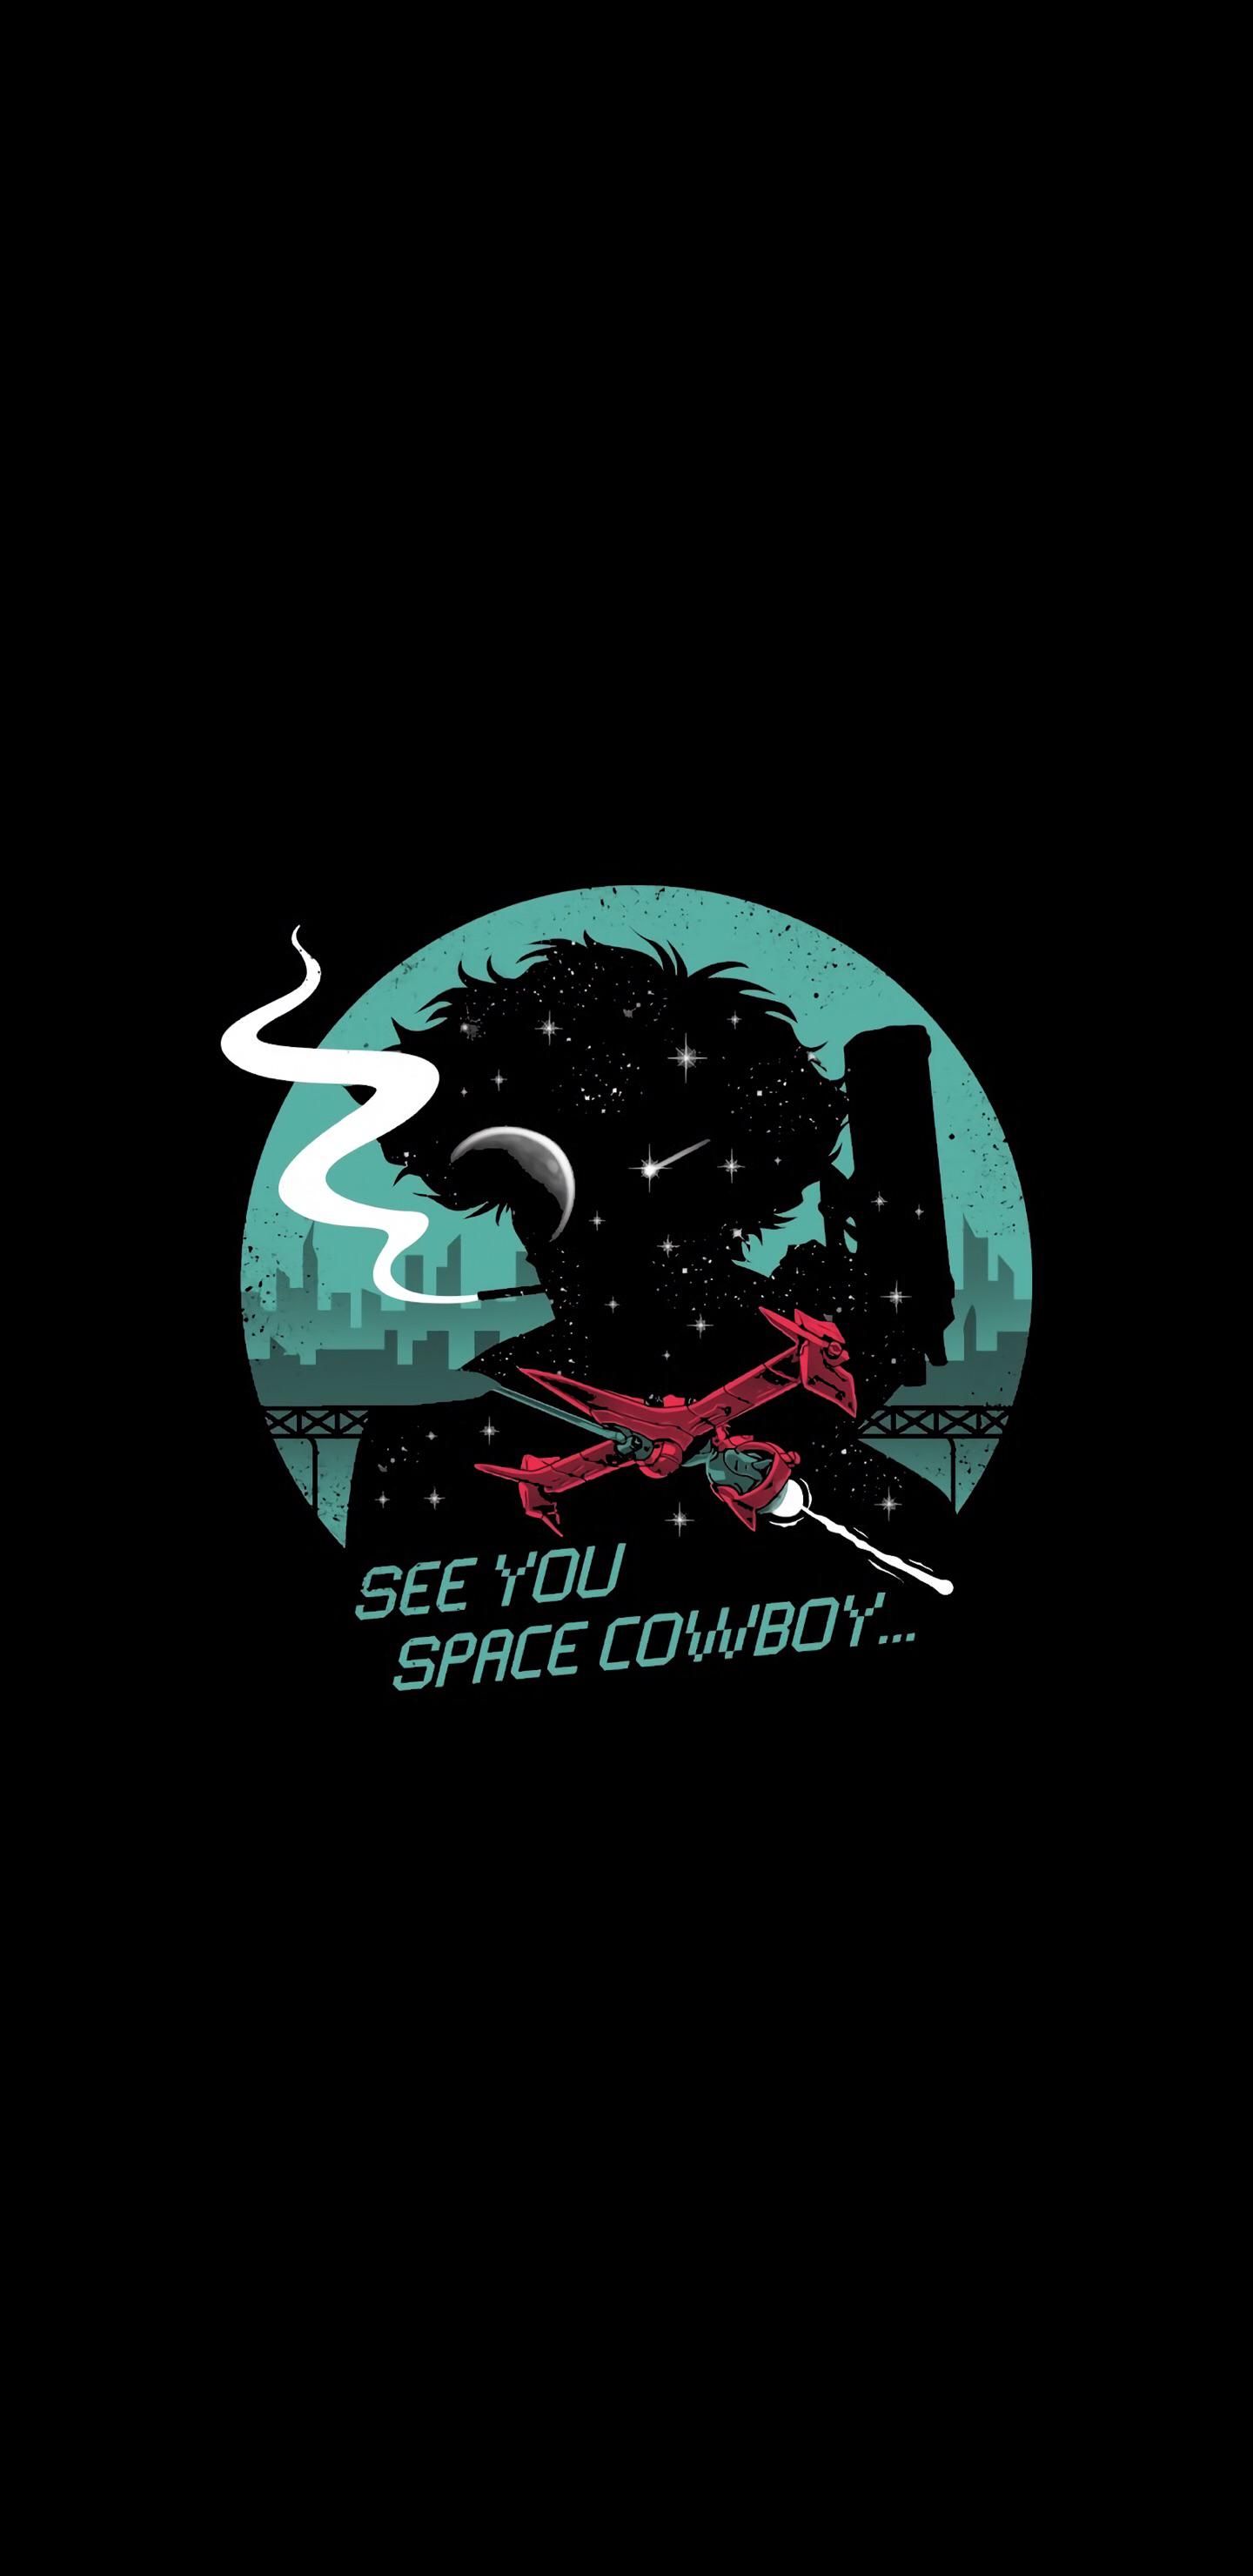 See you space cowboy. Cowboy bebop wallpaper